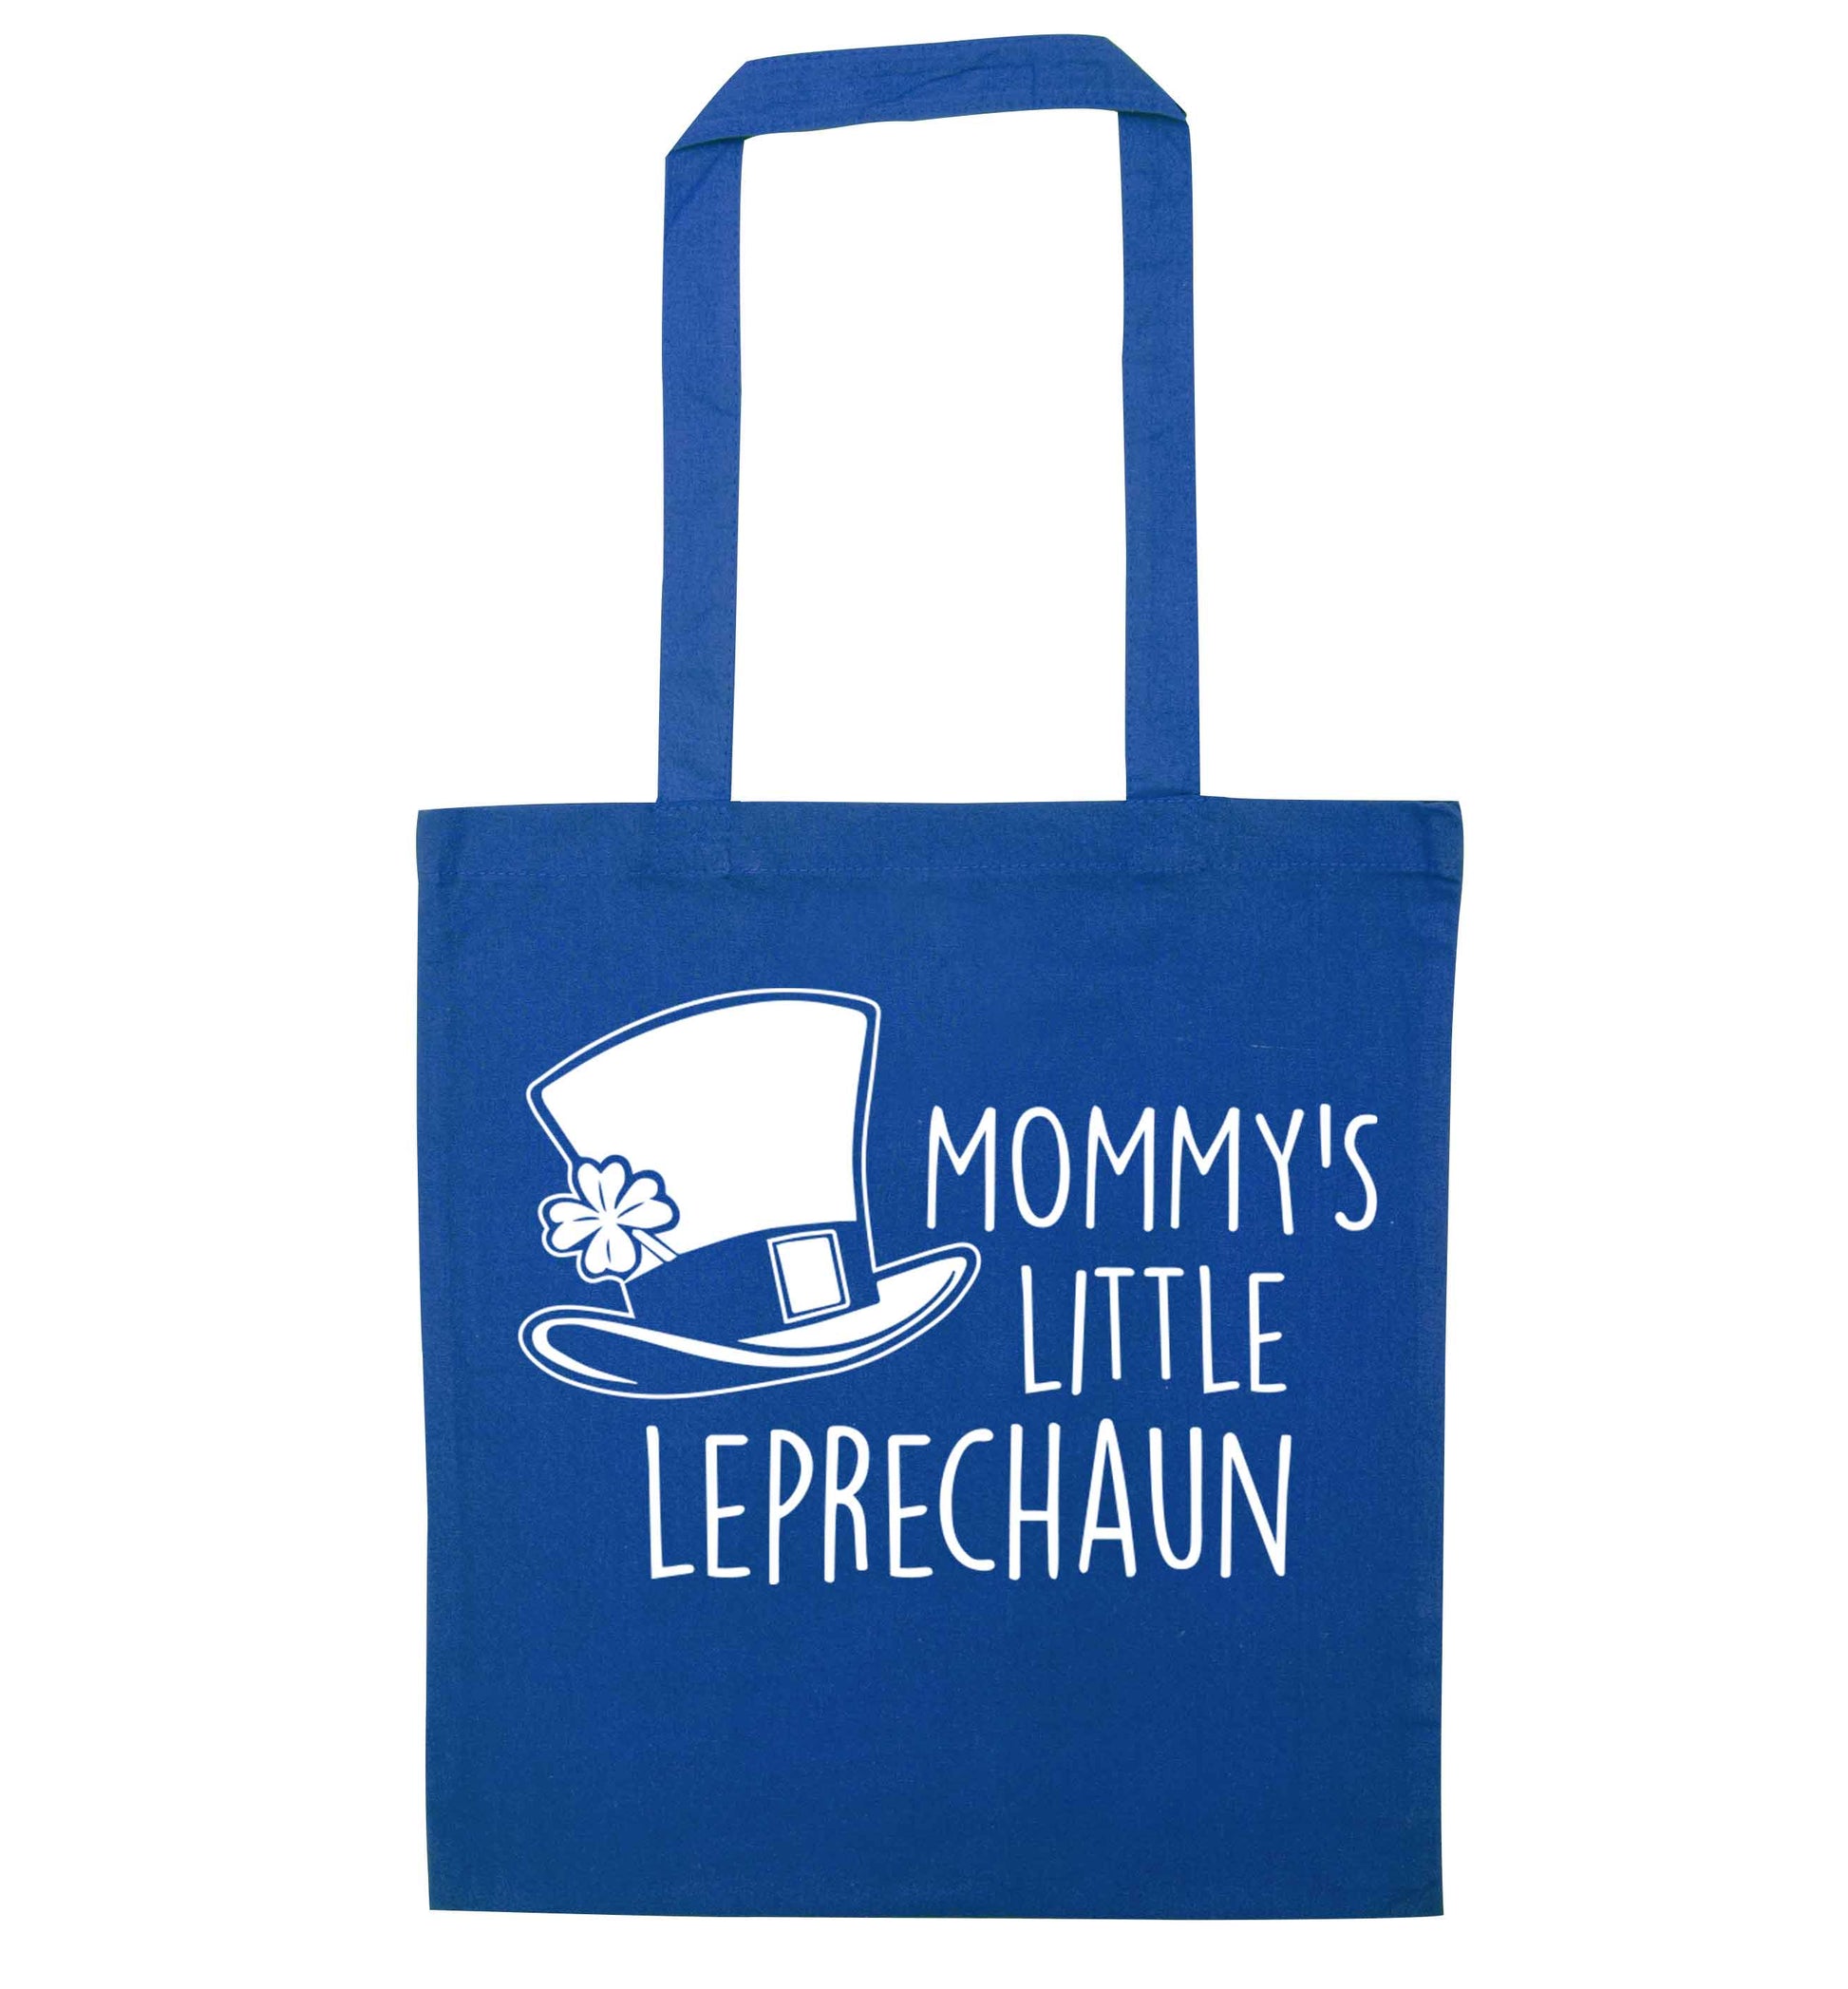 Mommy's little leprechaun blue tote bag